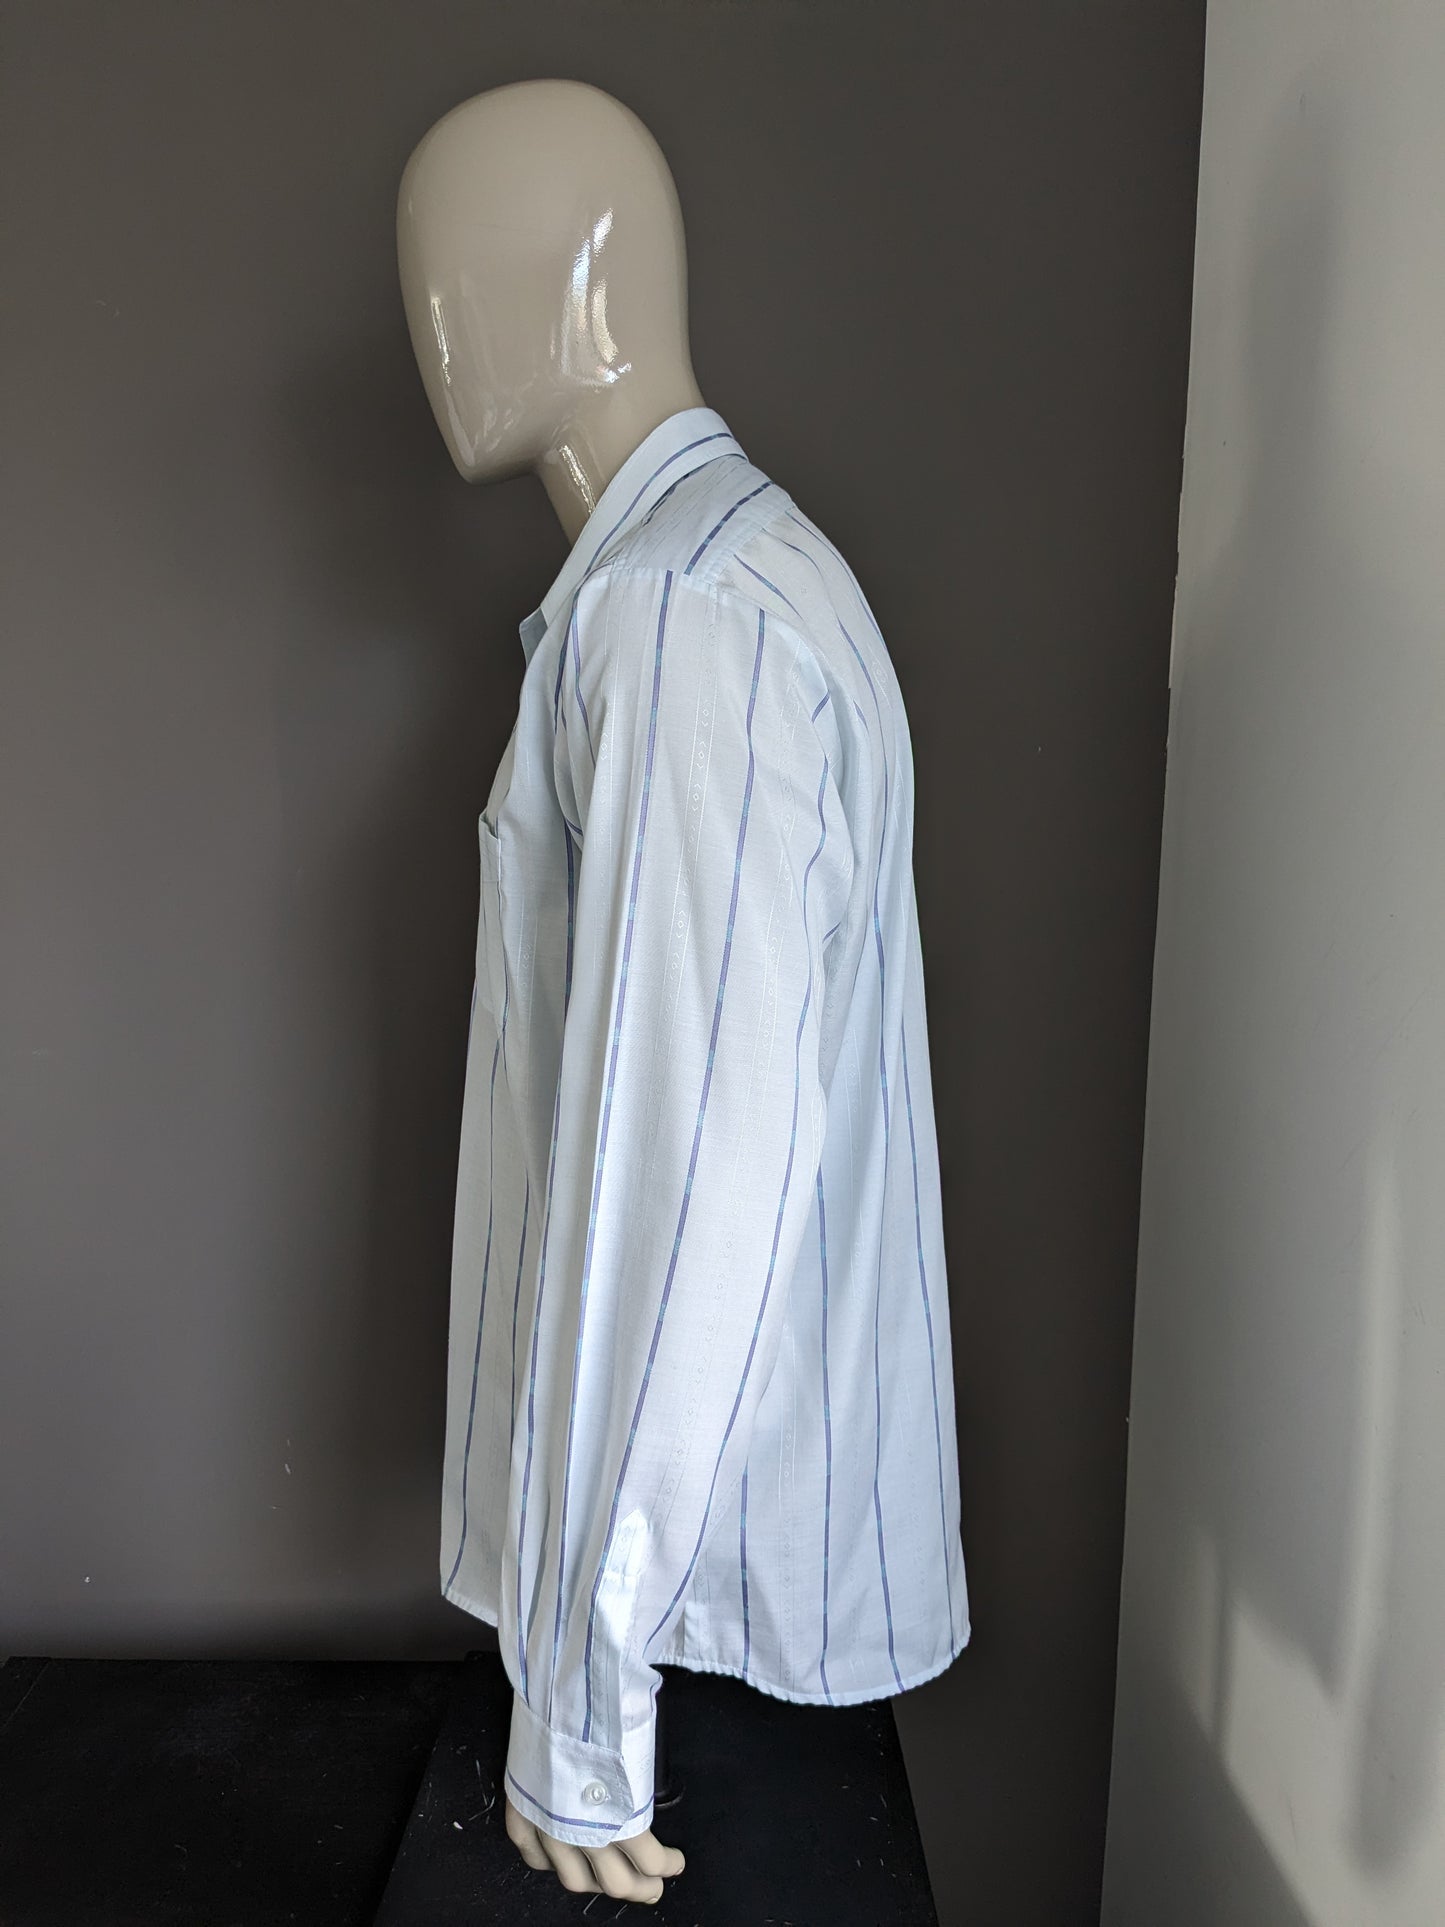 Camisa Vintage Jacqueline de Tancot 70 con cuello de punto. Motivo azul claro. Tamaño XL / XXL-2XL.